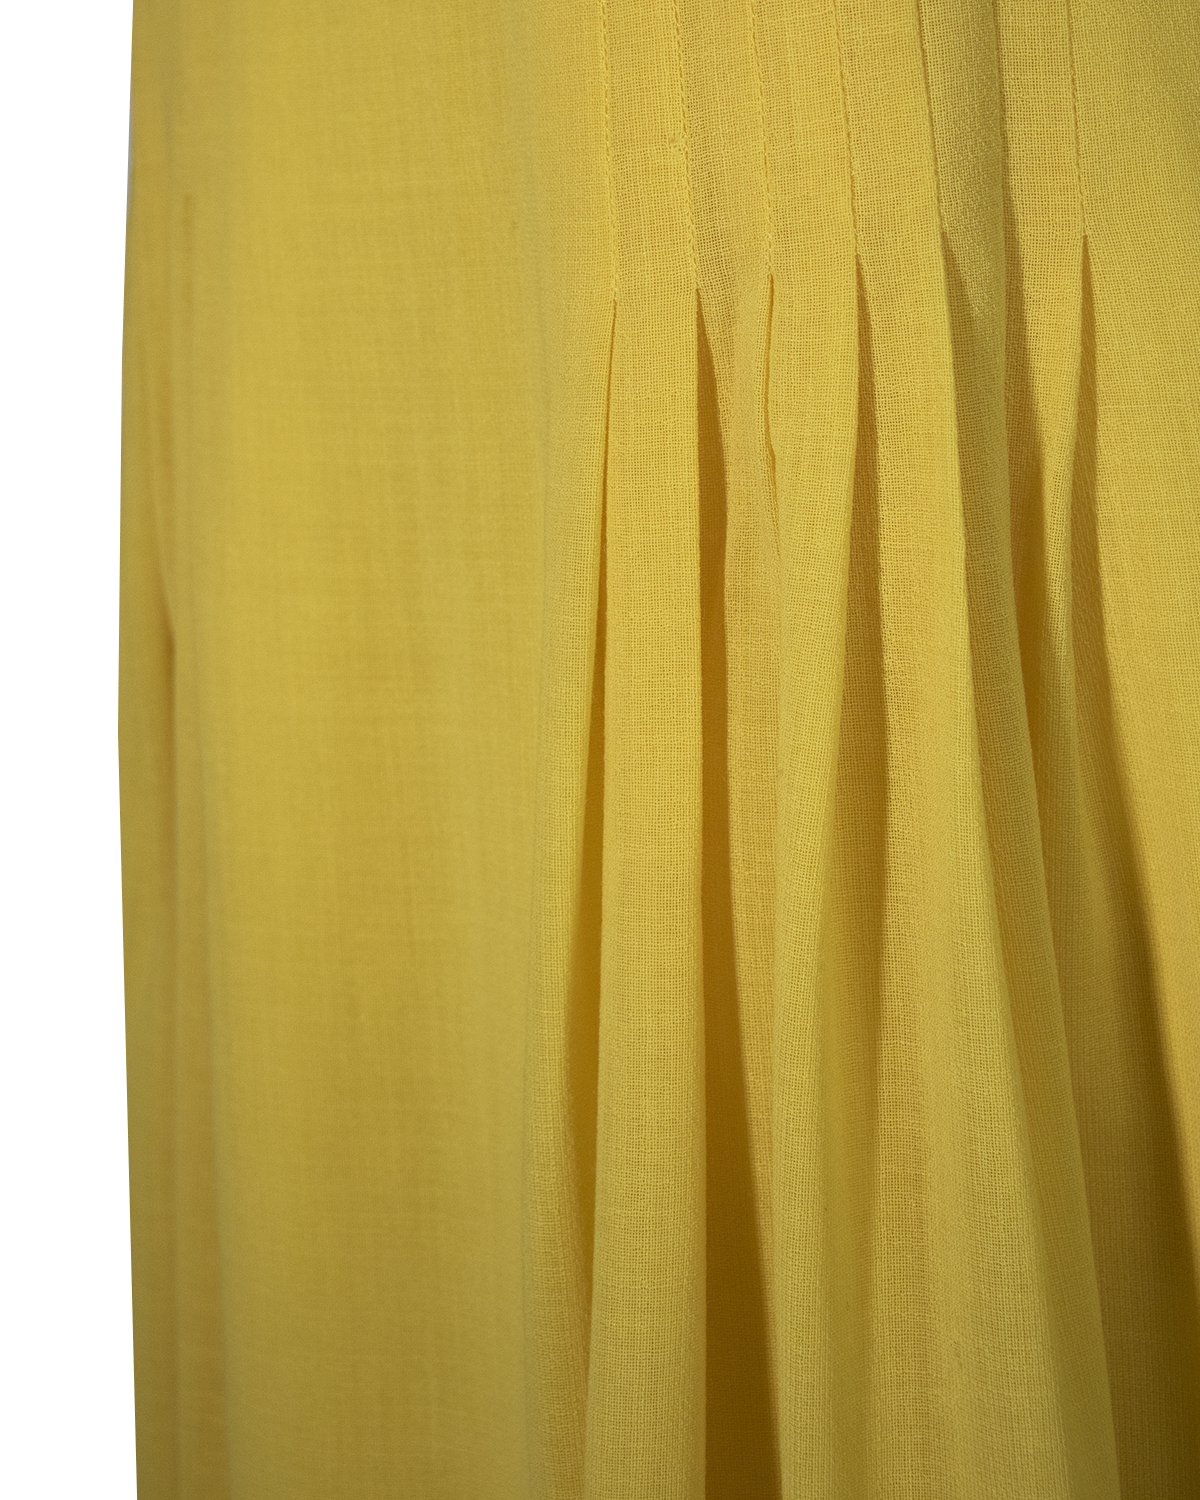 Pierre Cardin Yellow Dress from 1970s